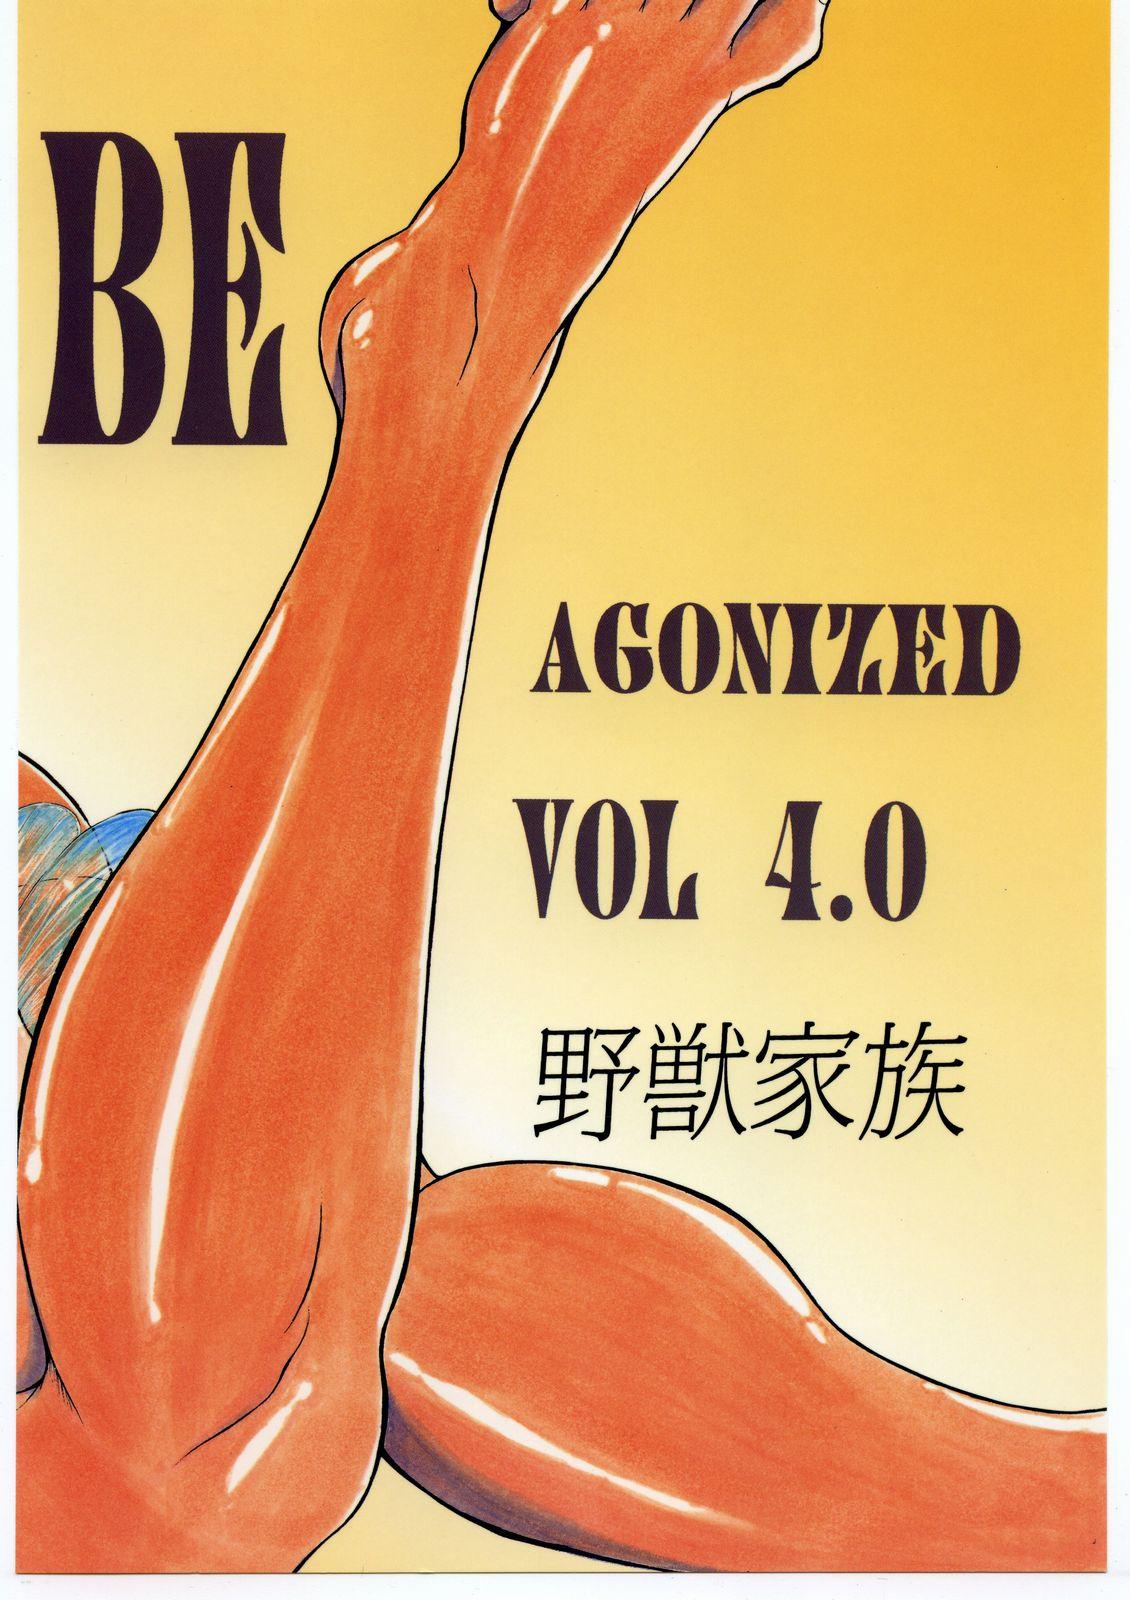 Be Agonized vol 4.0 - Berserk Book 56